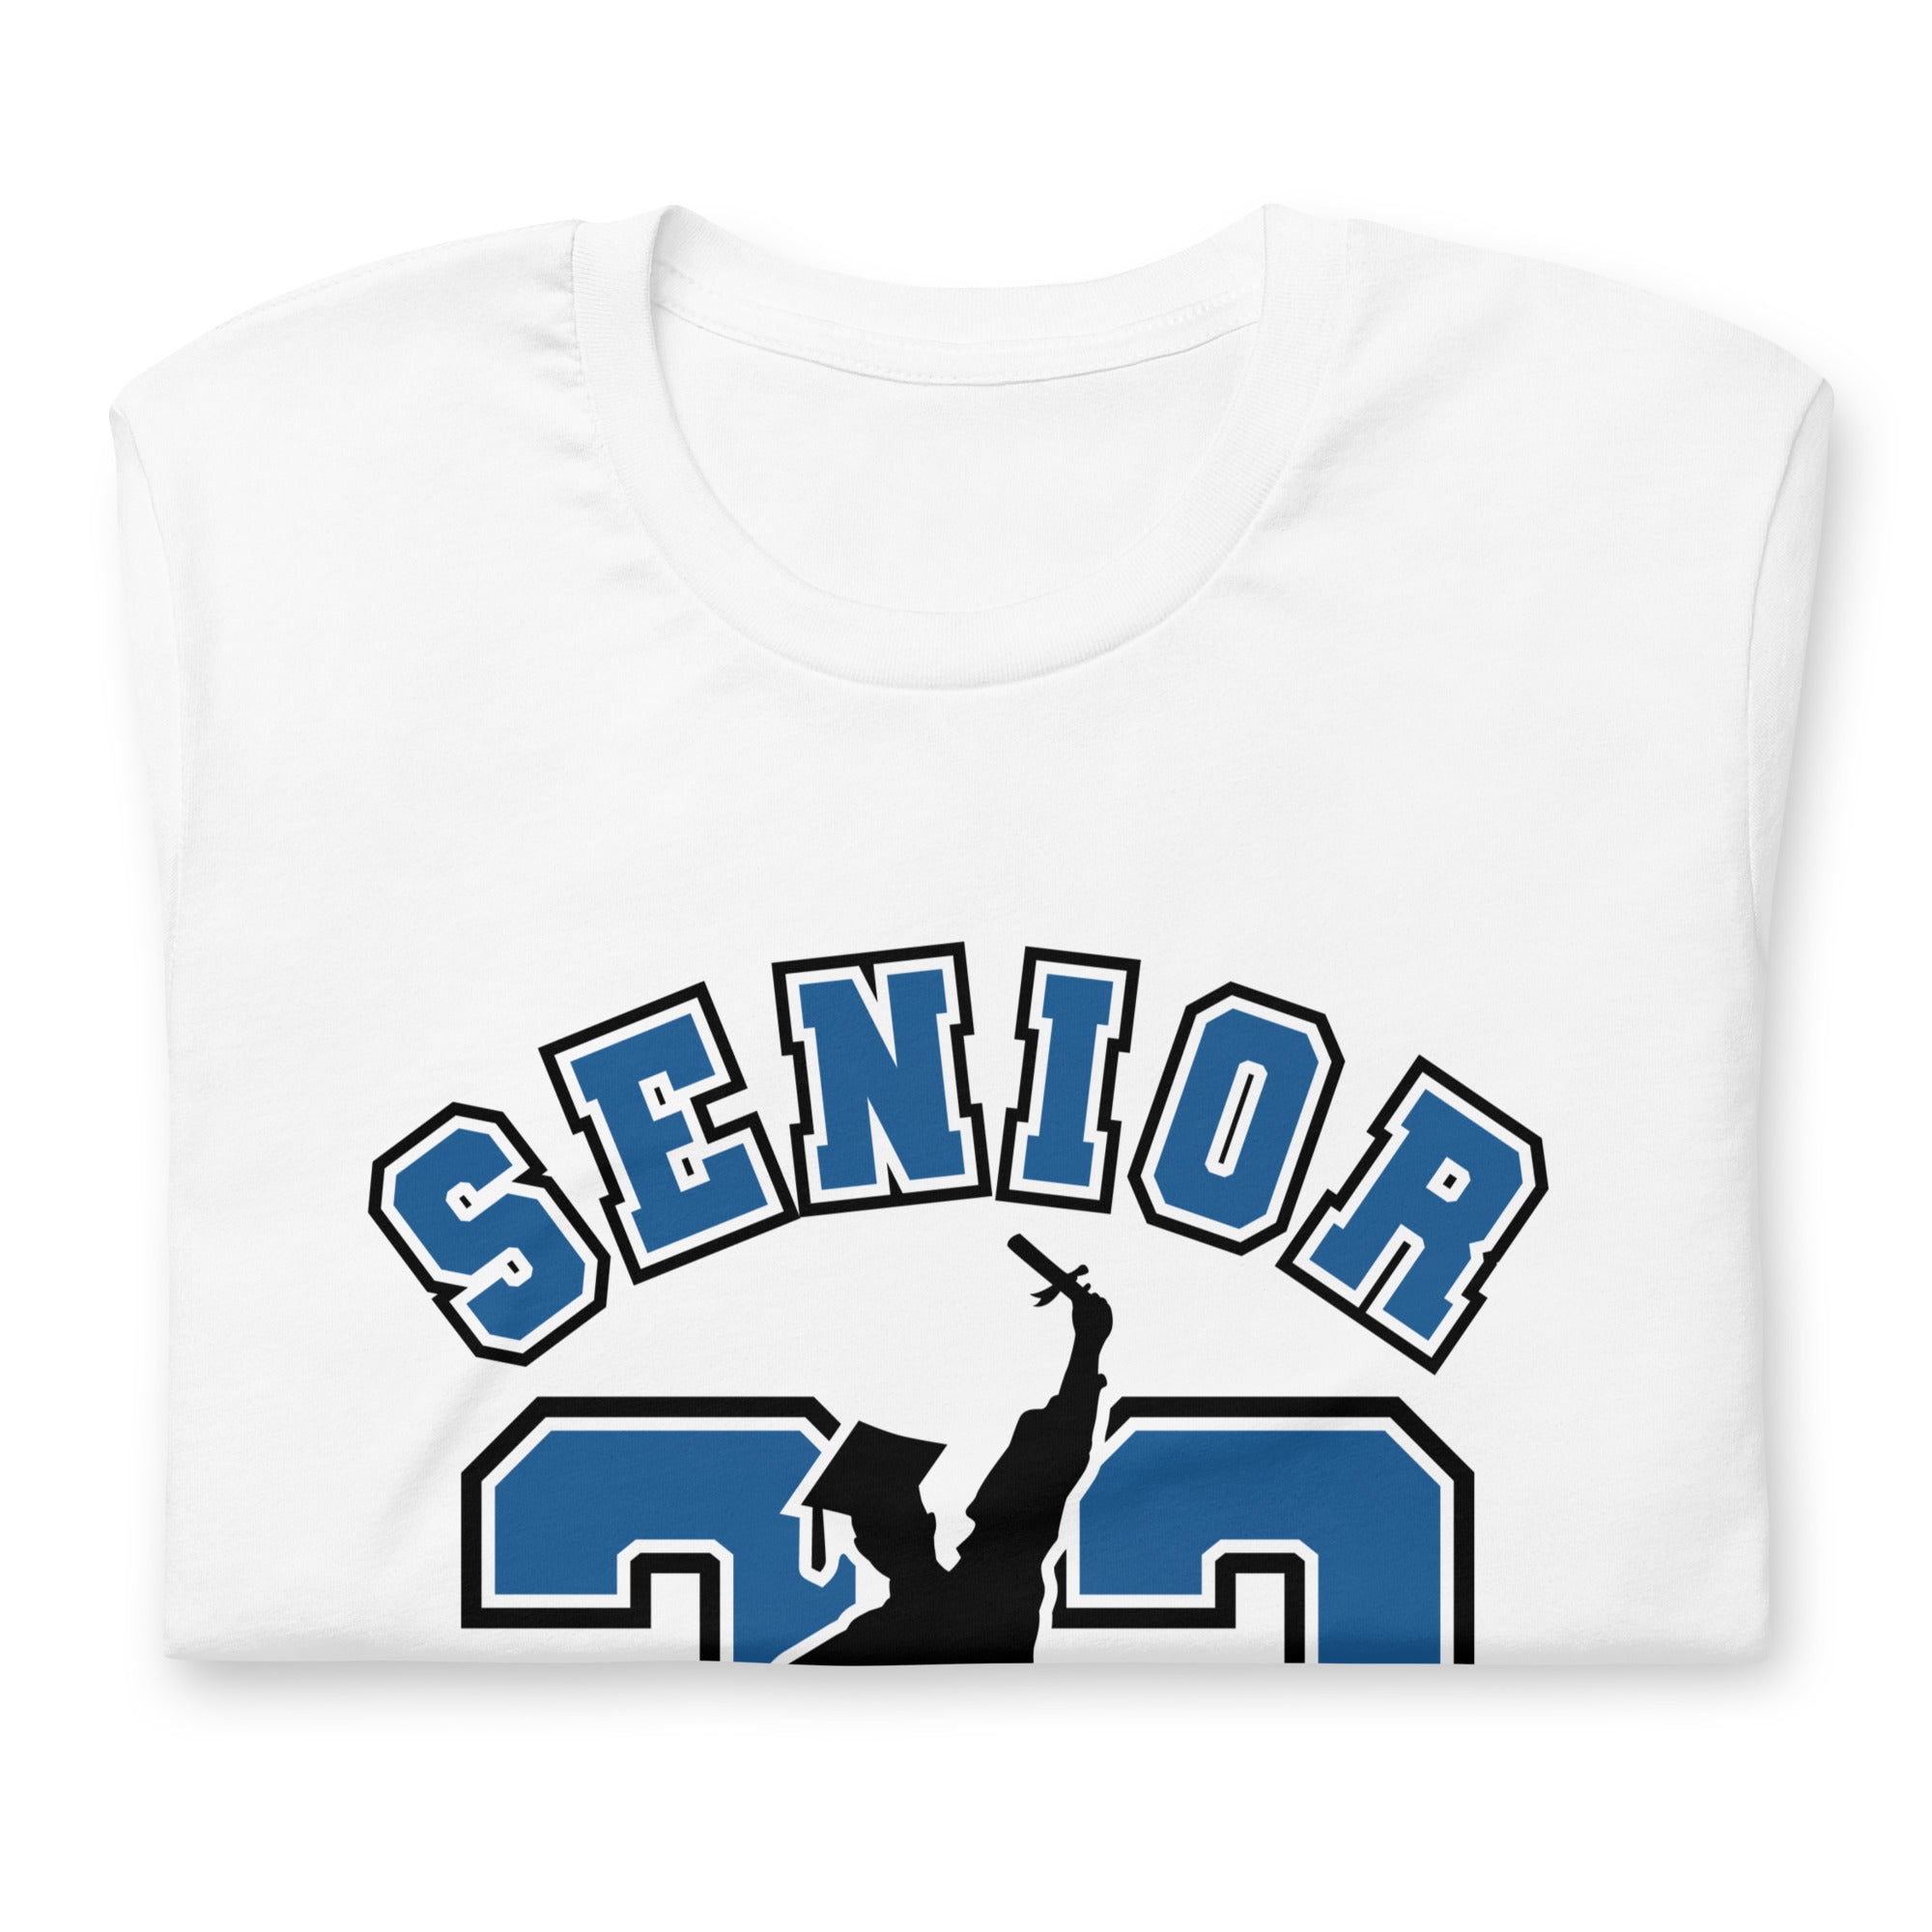 Senior 23 Unisex t-shirt (blue/blk)